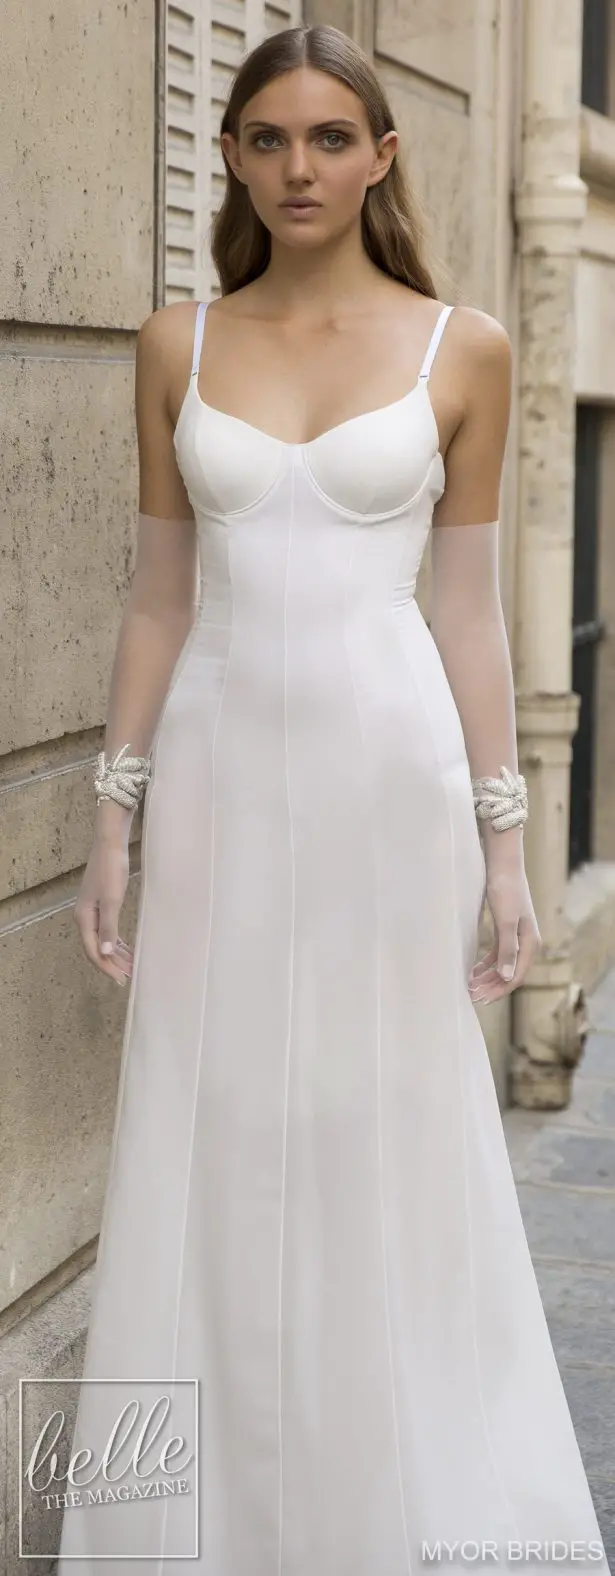 MYOR Brides Wedding Dress Collection 2018 - AVIA Dress